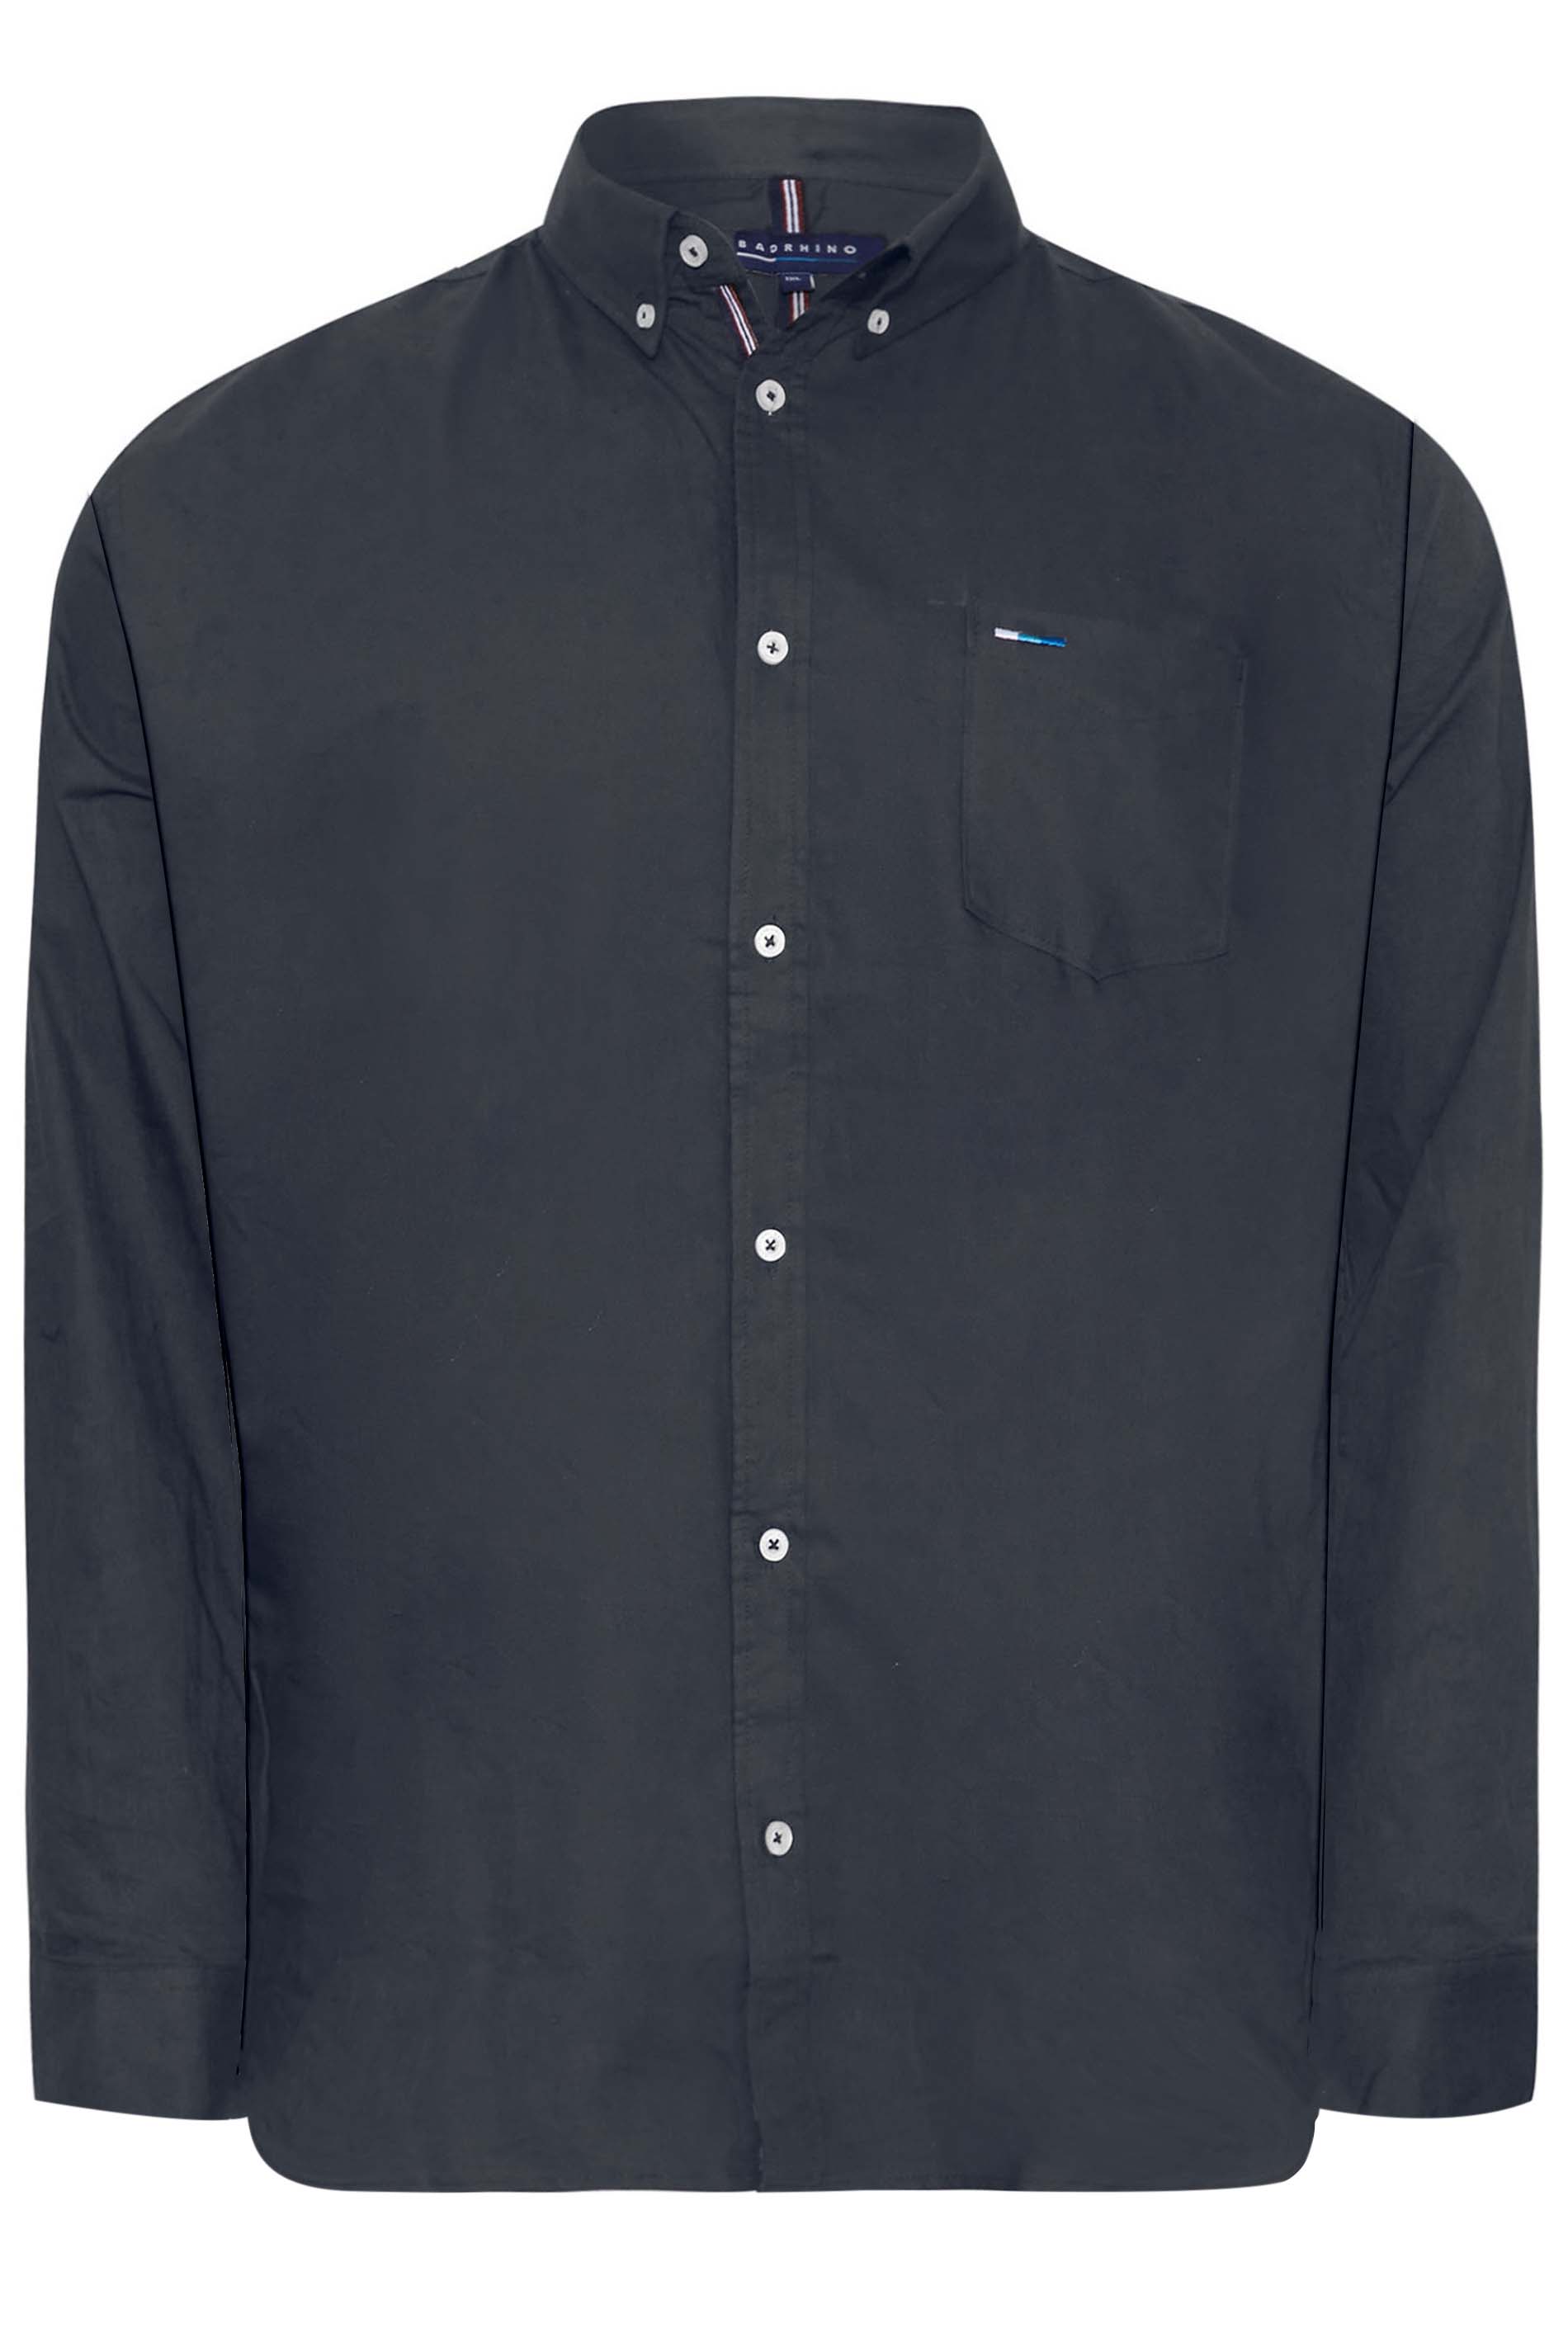 BadRhino Navy Blue Essential Long Sleeve Oxford Shirt | BadRhino 3